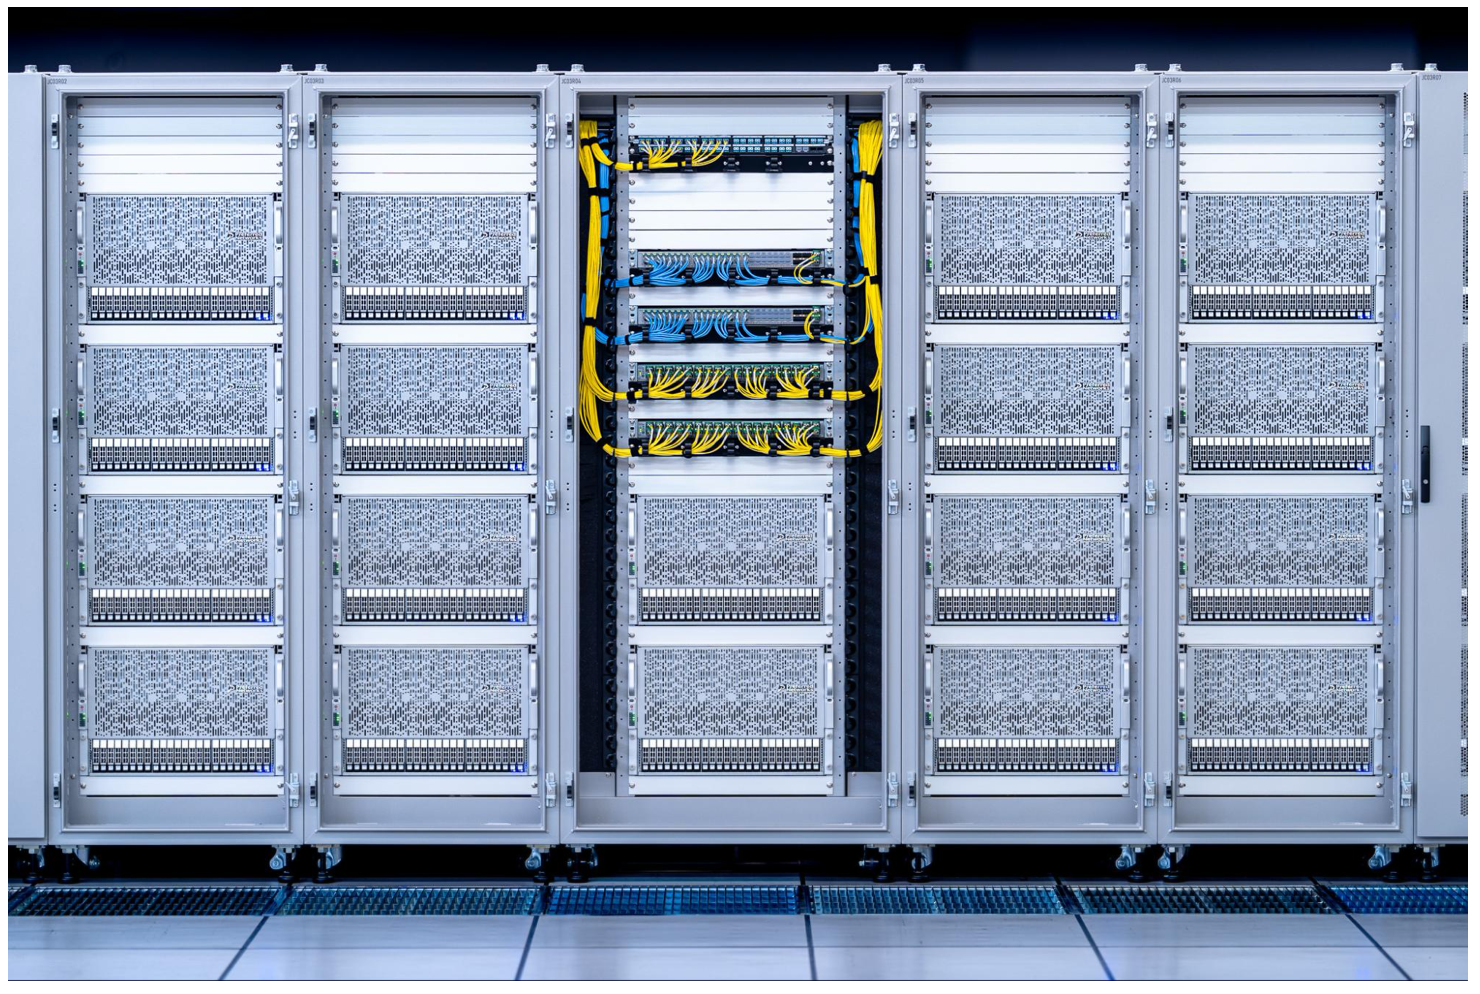 MN 3 Supercomputer